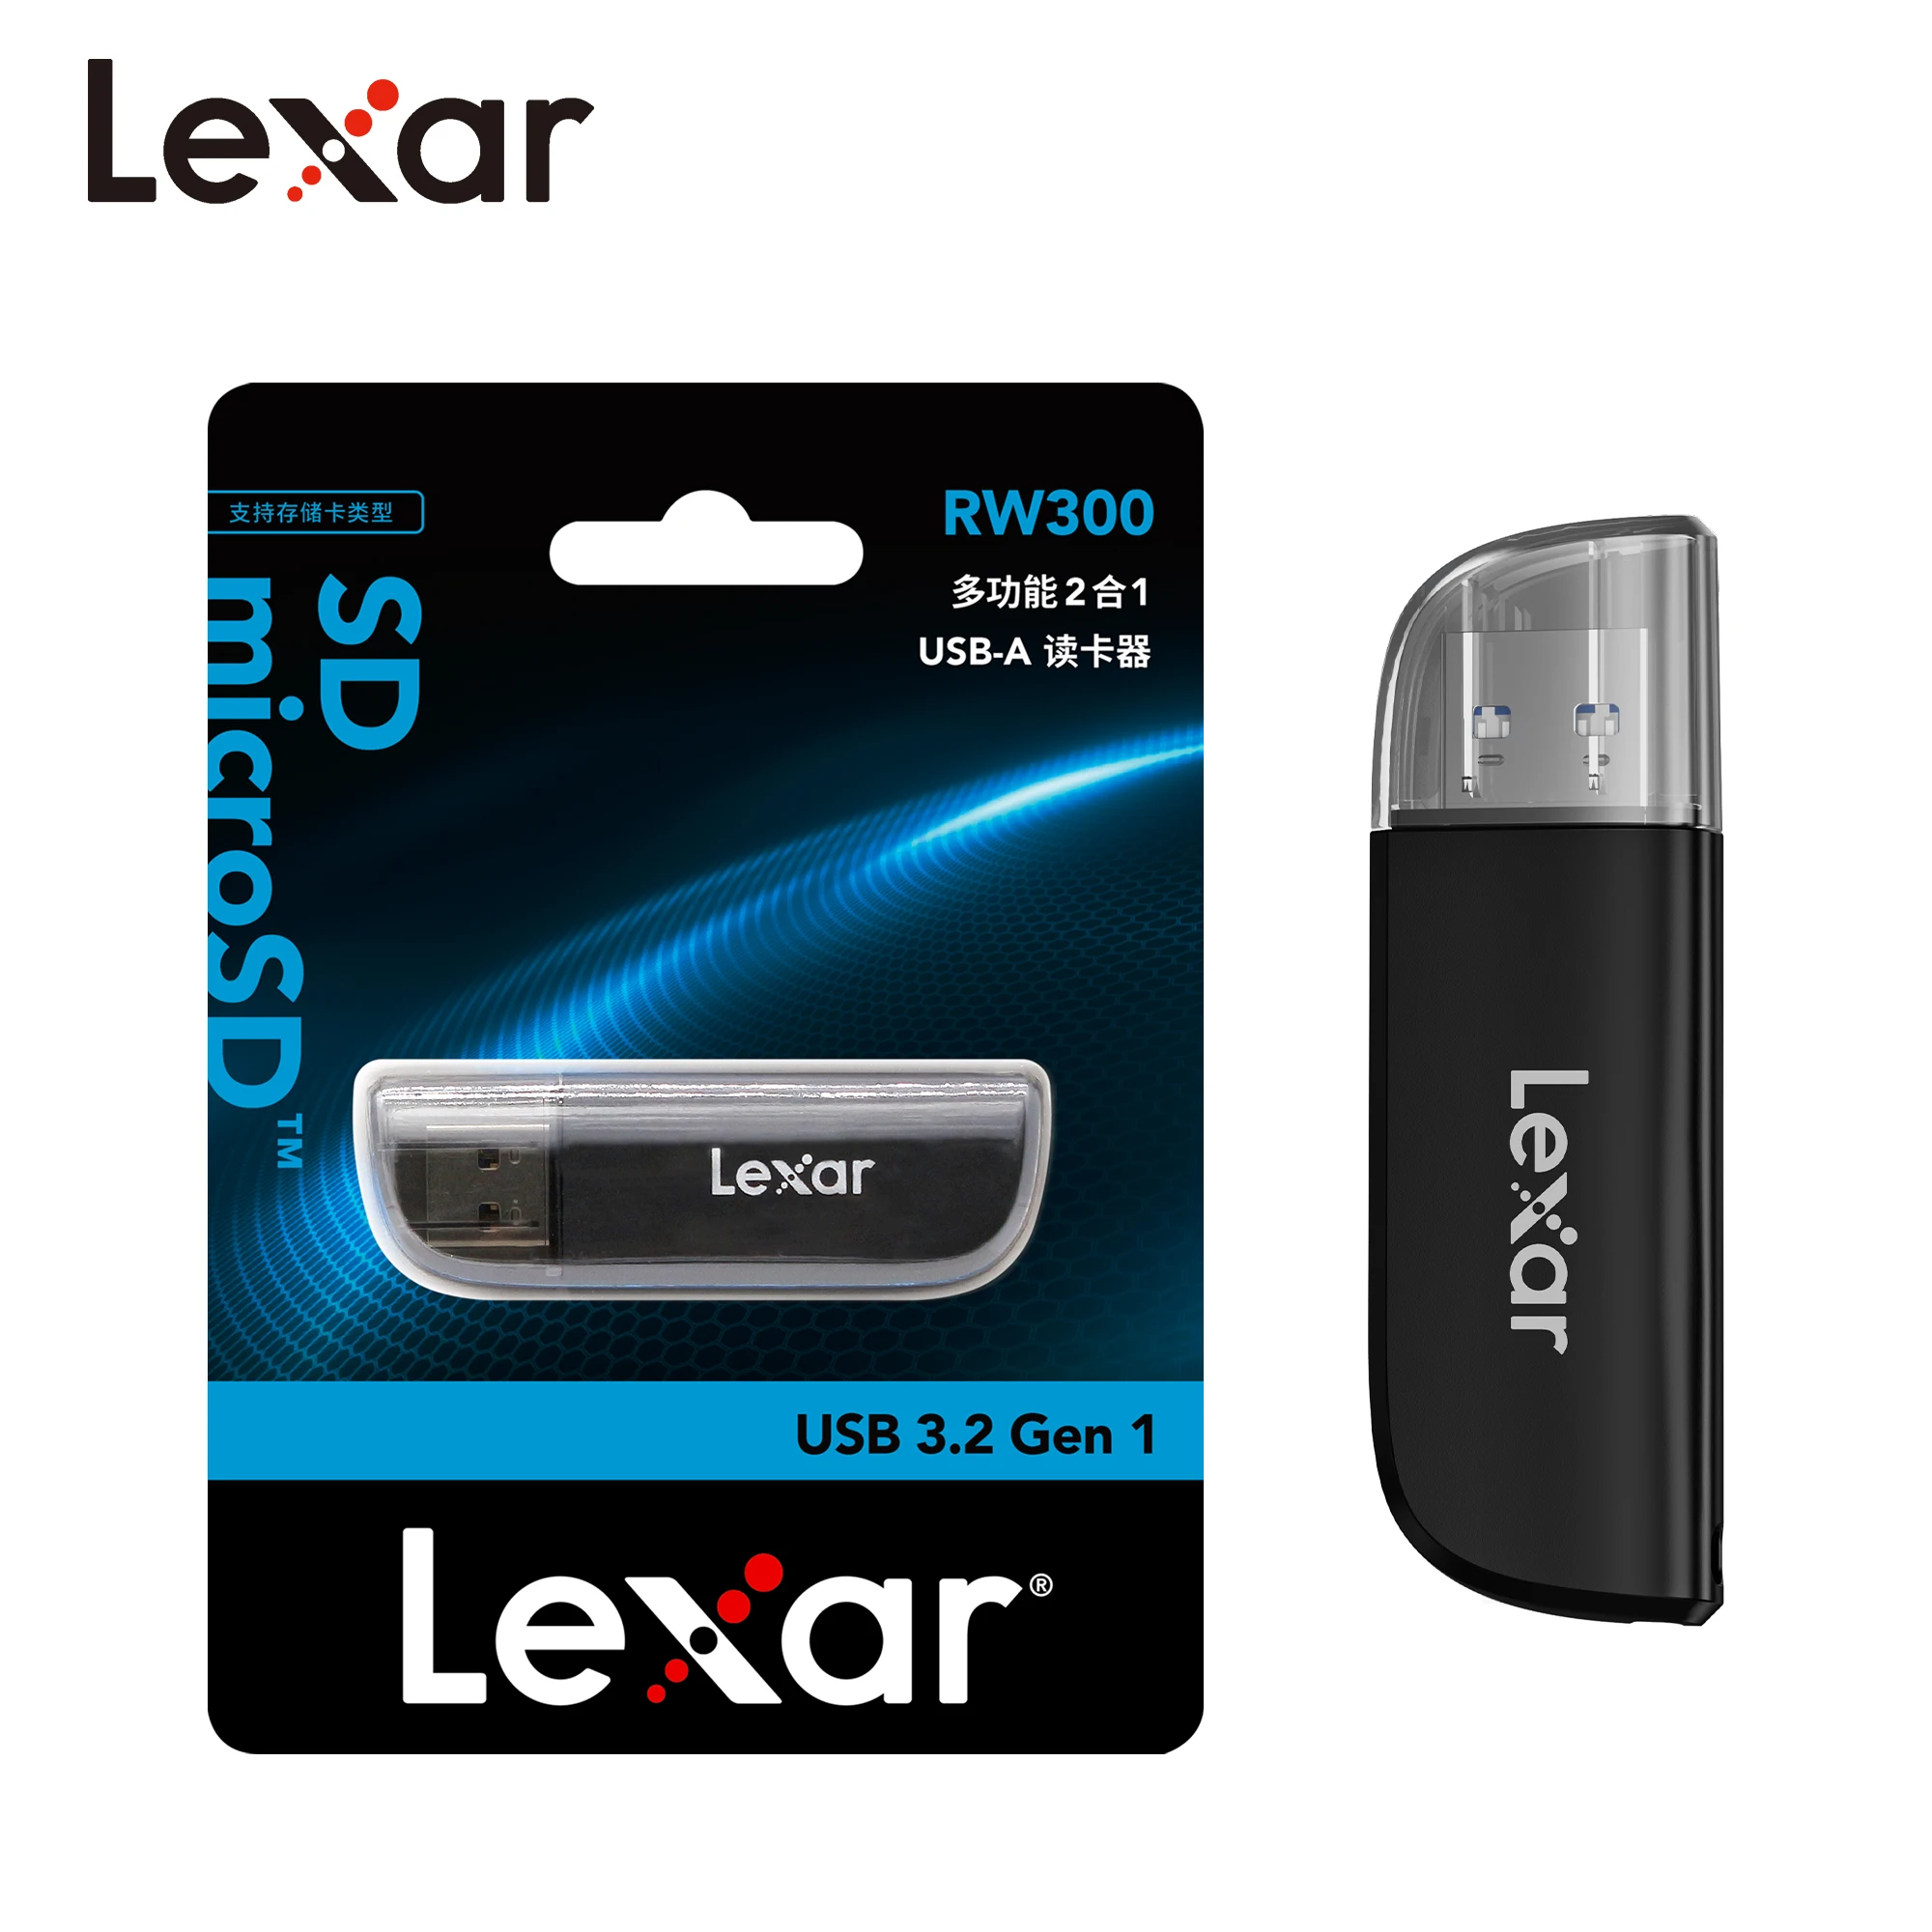 Lexar microSD Card Reader LRW330U-BNBNU B&H Photo Video